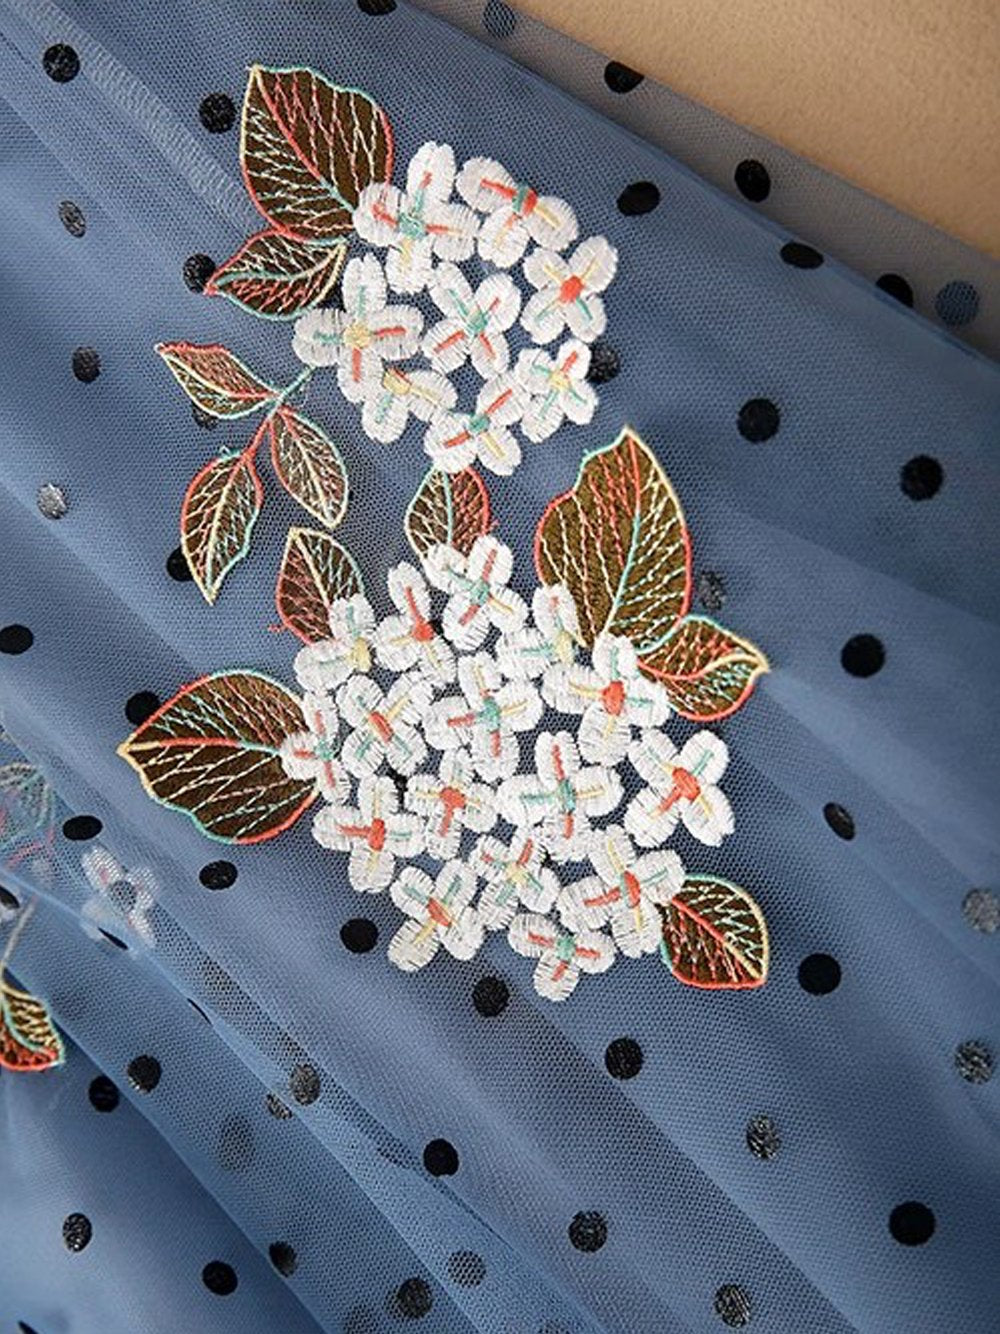 SADIE Embroidered Maxi Dress